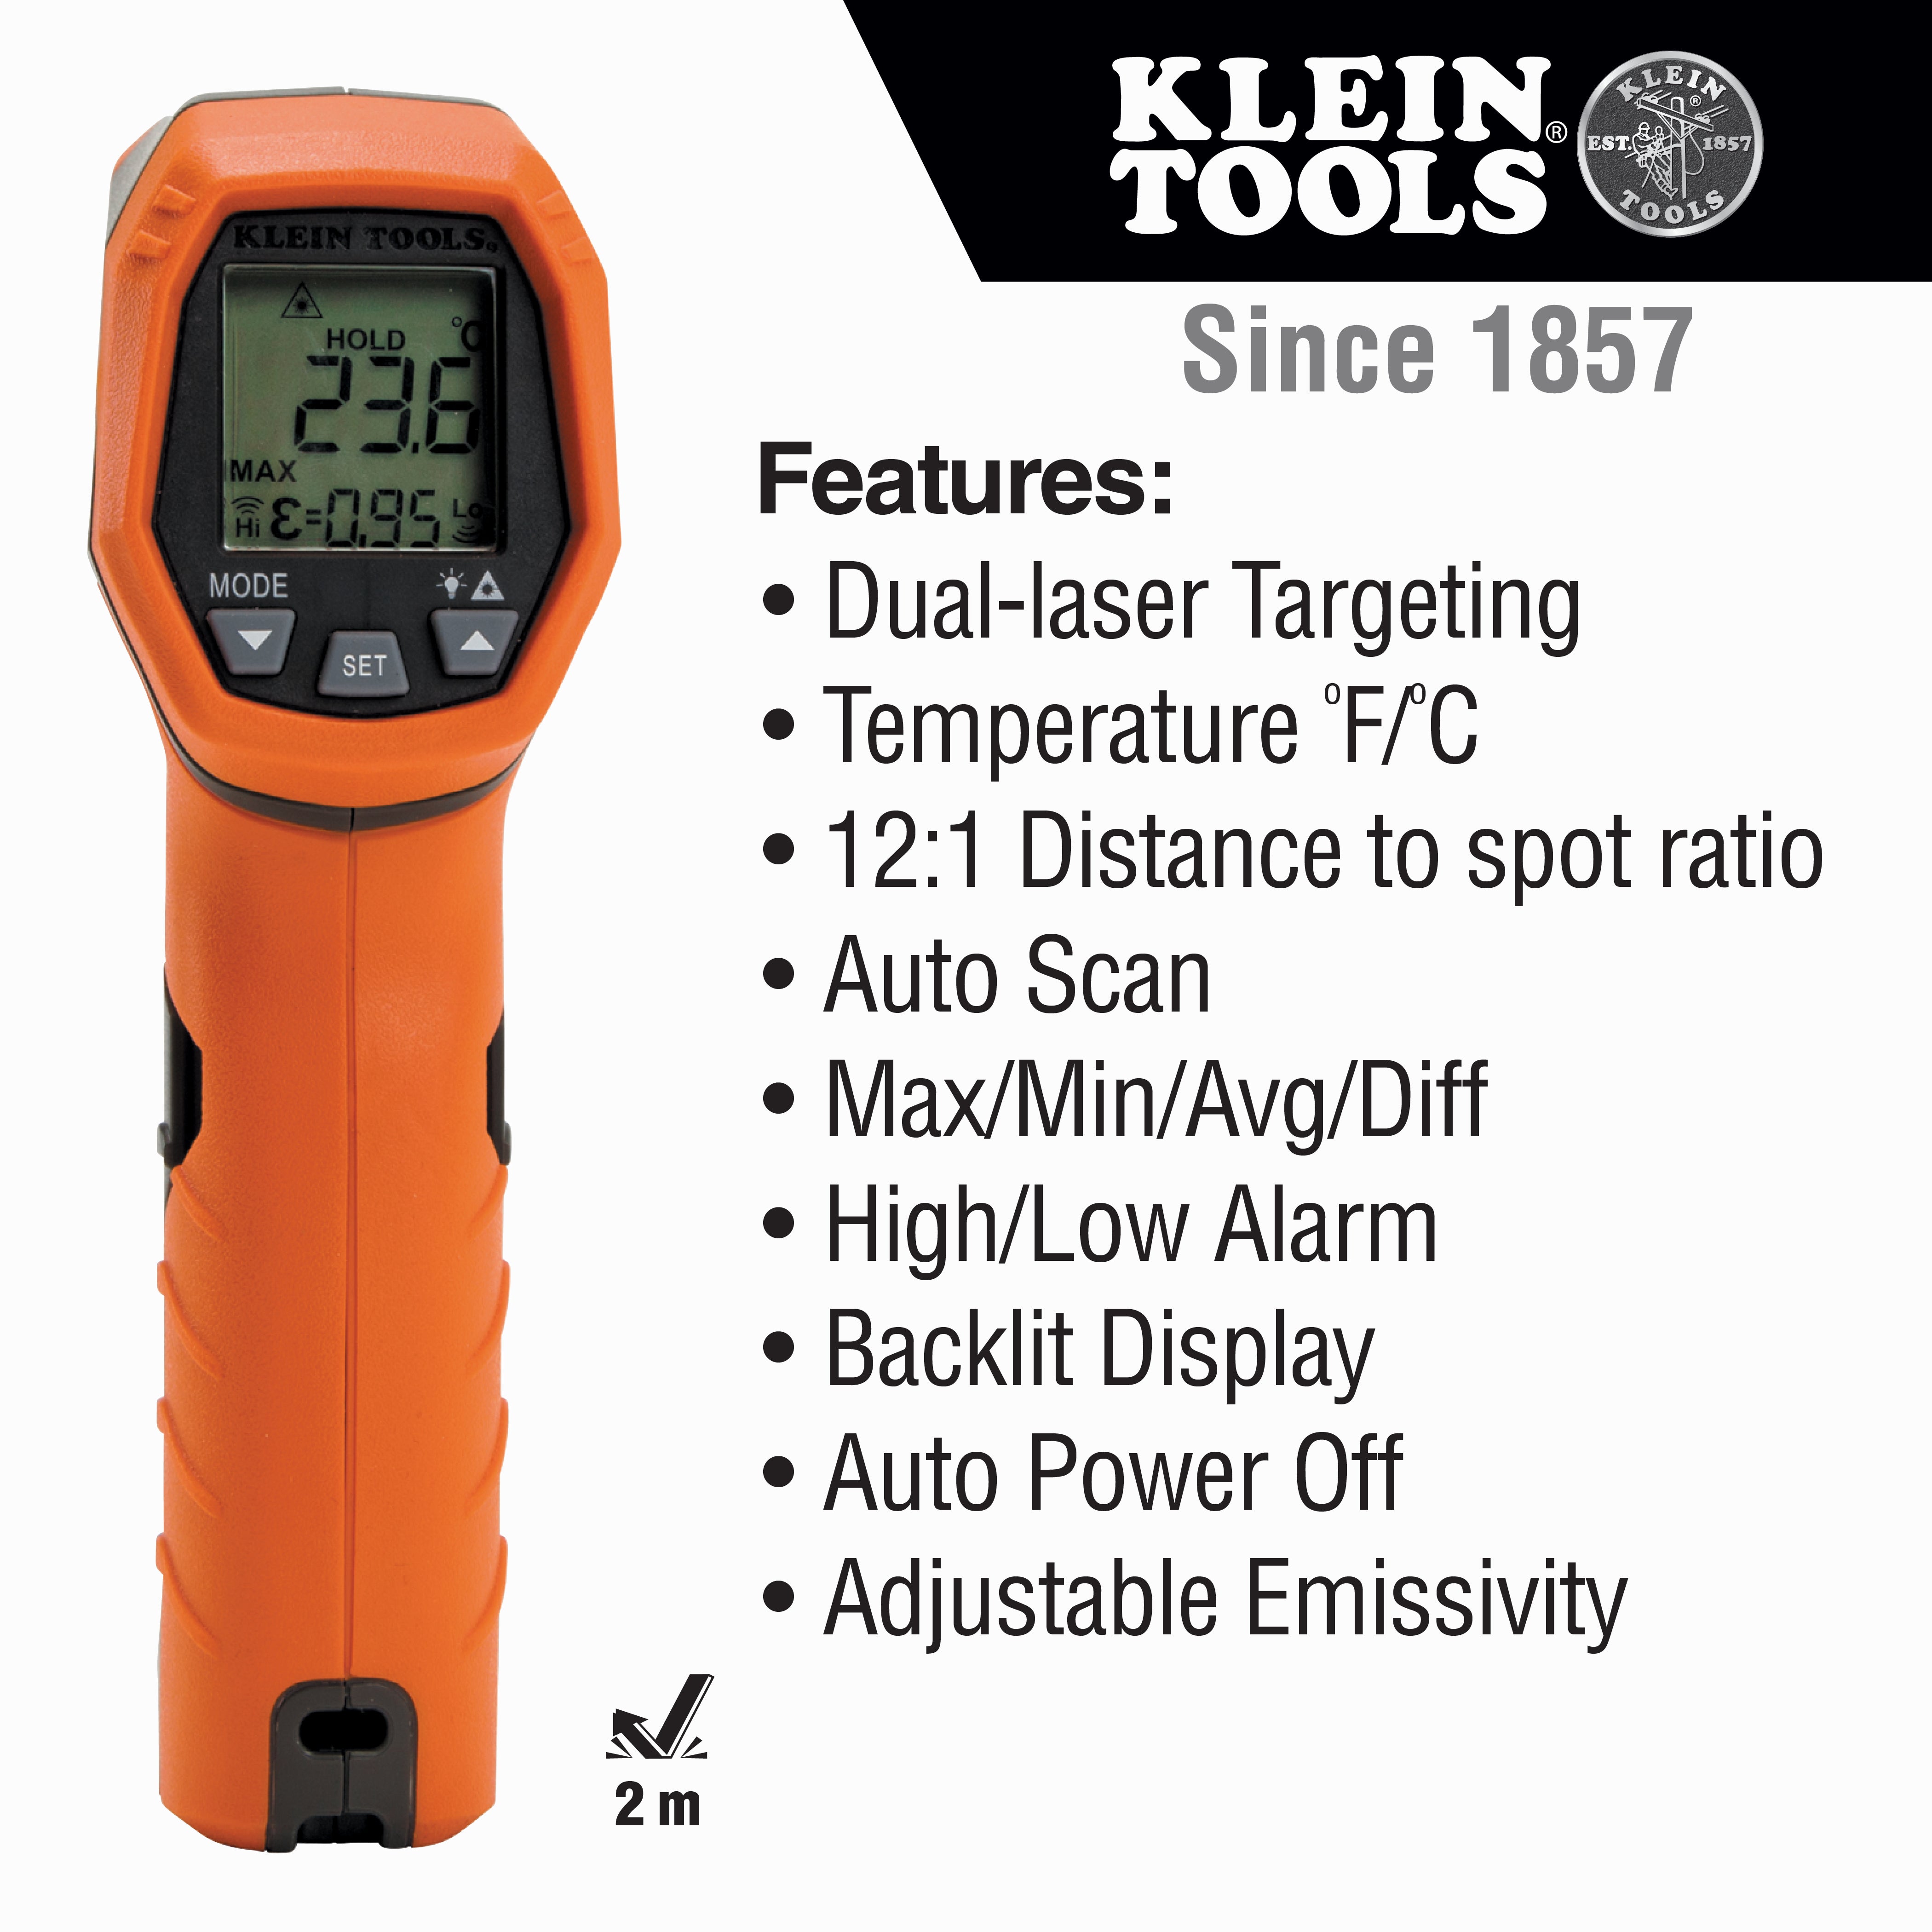 Klein KLE-IR5 - Dual Laser Infrared Thermometer